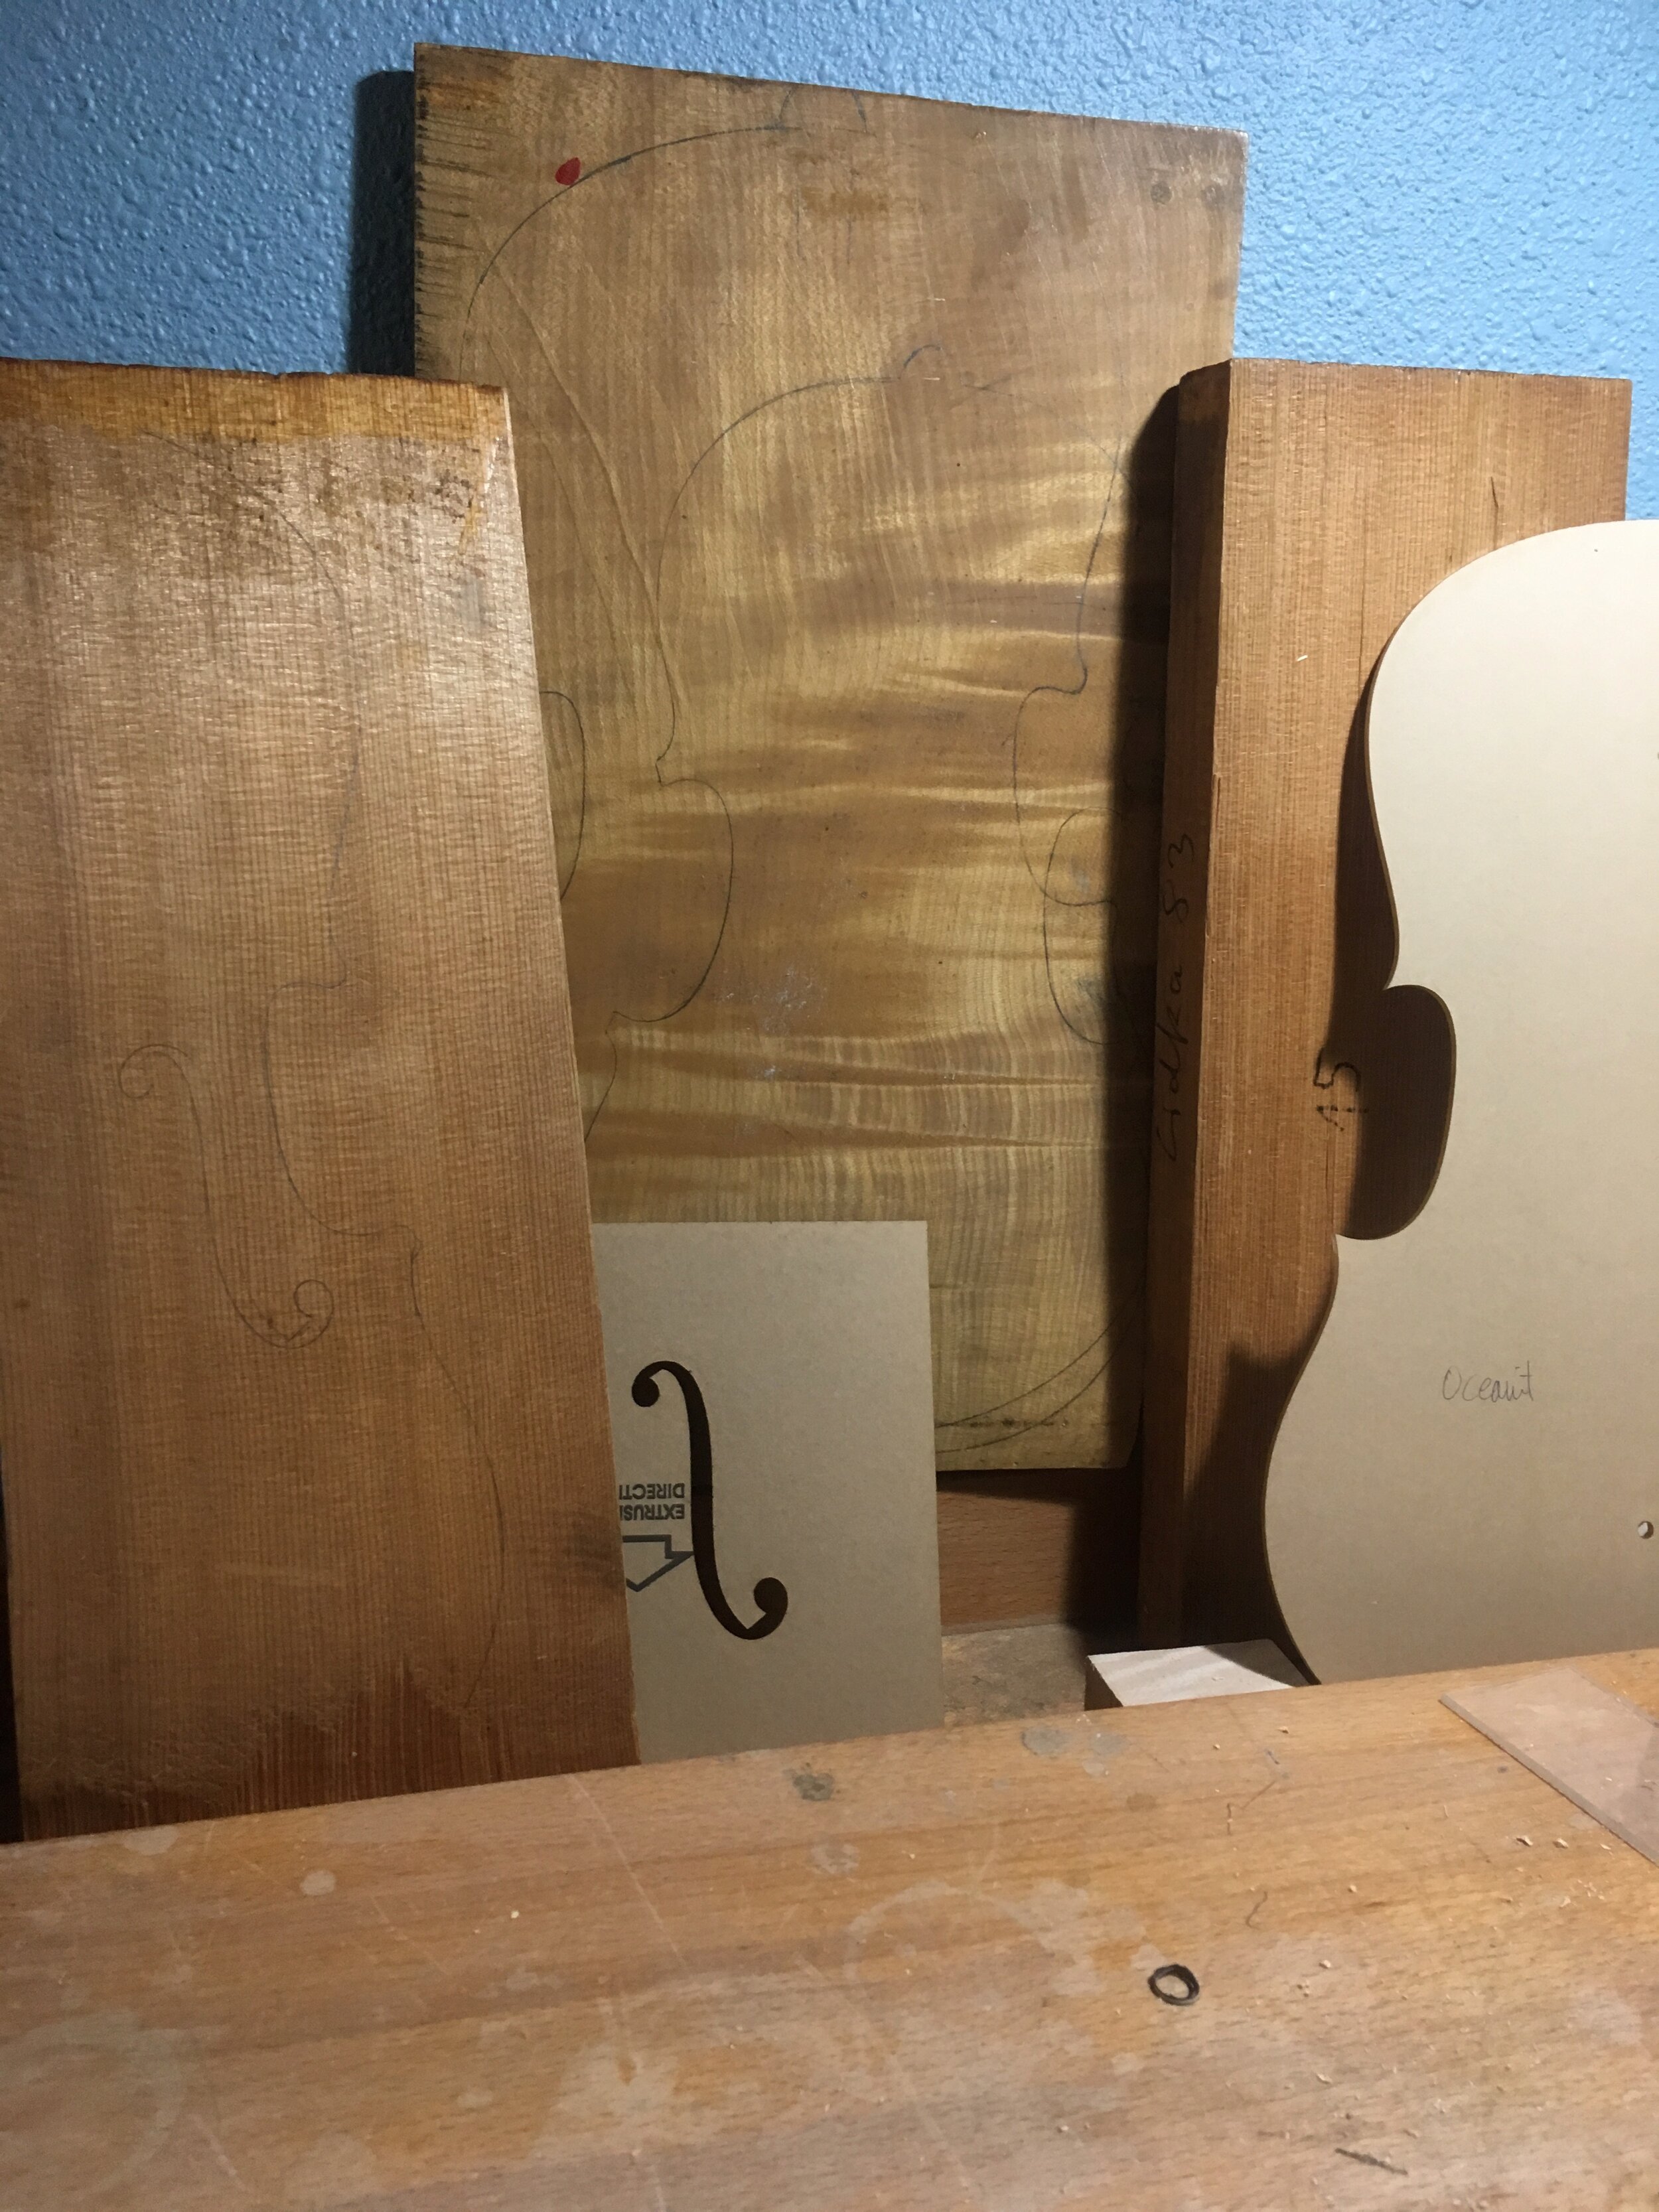  Choosing the wood for the Testore viola 